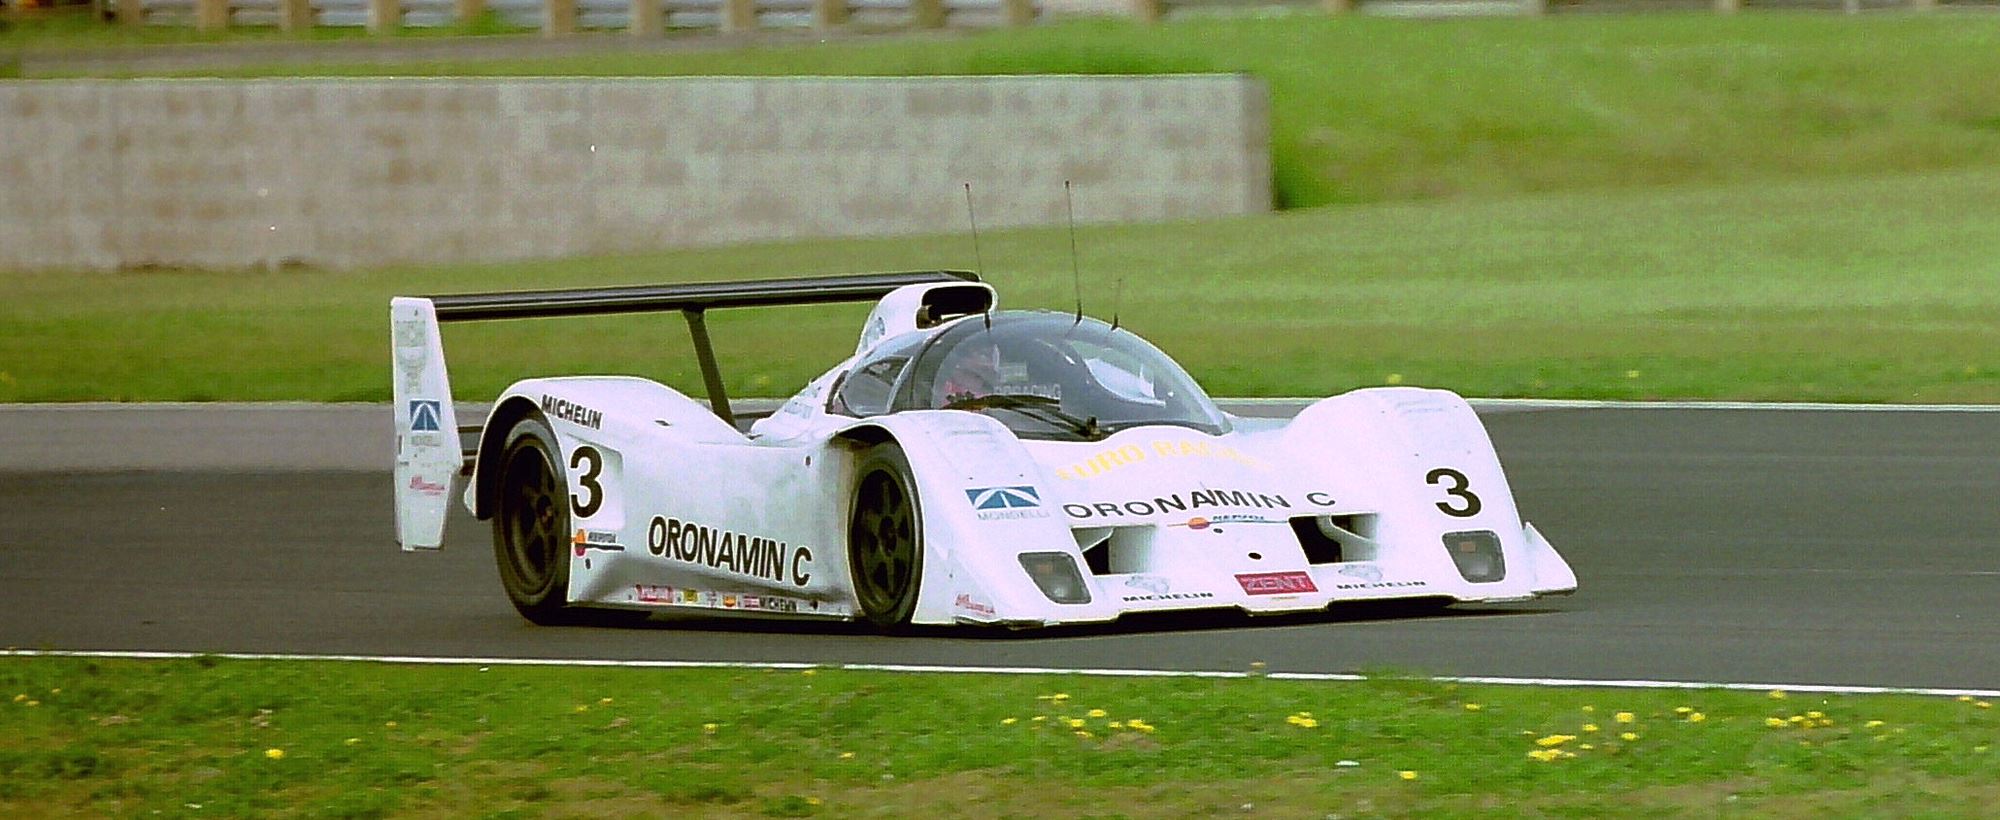 Lola_T9210_at_Silverstone_in_1992.jpg